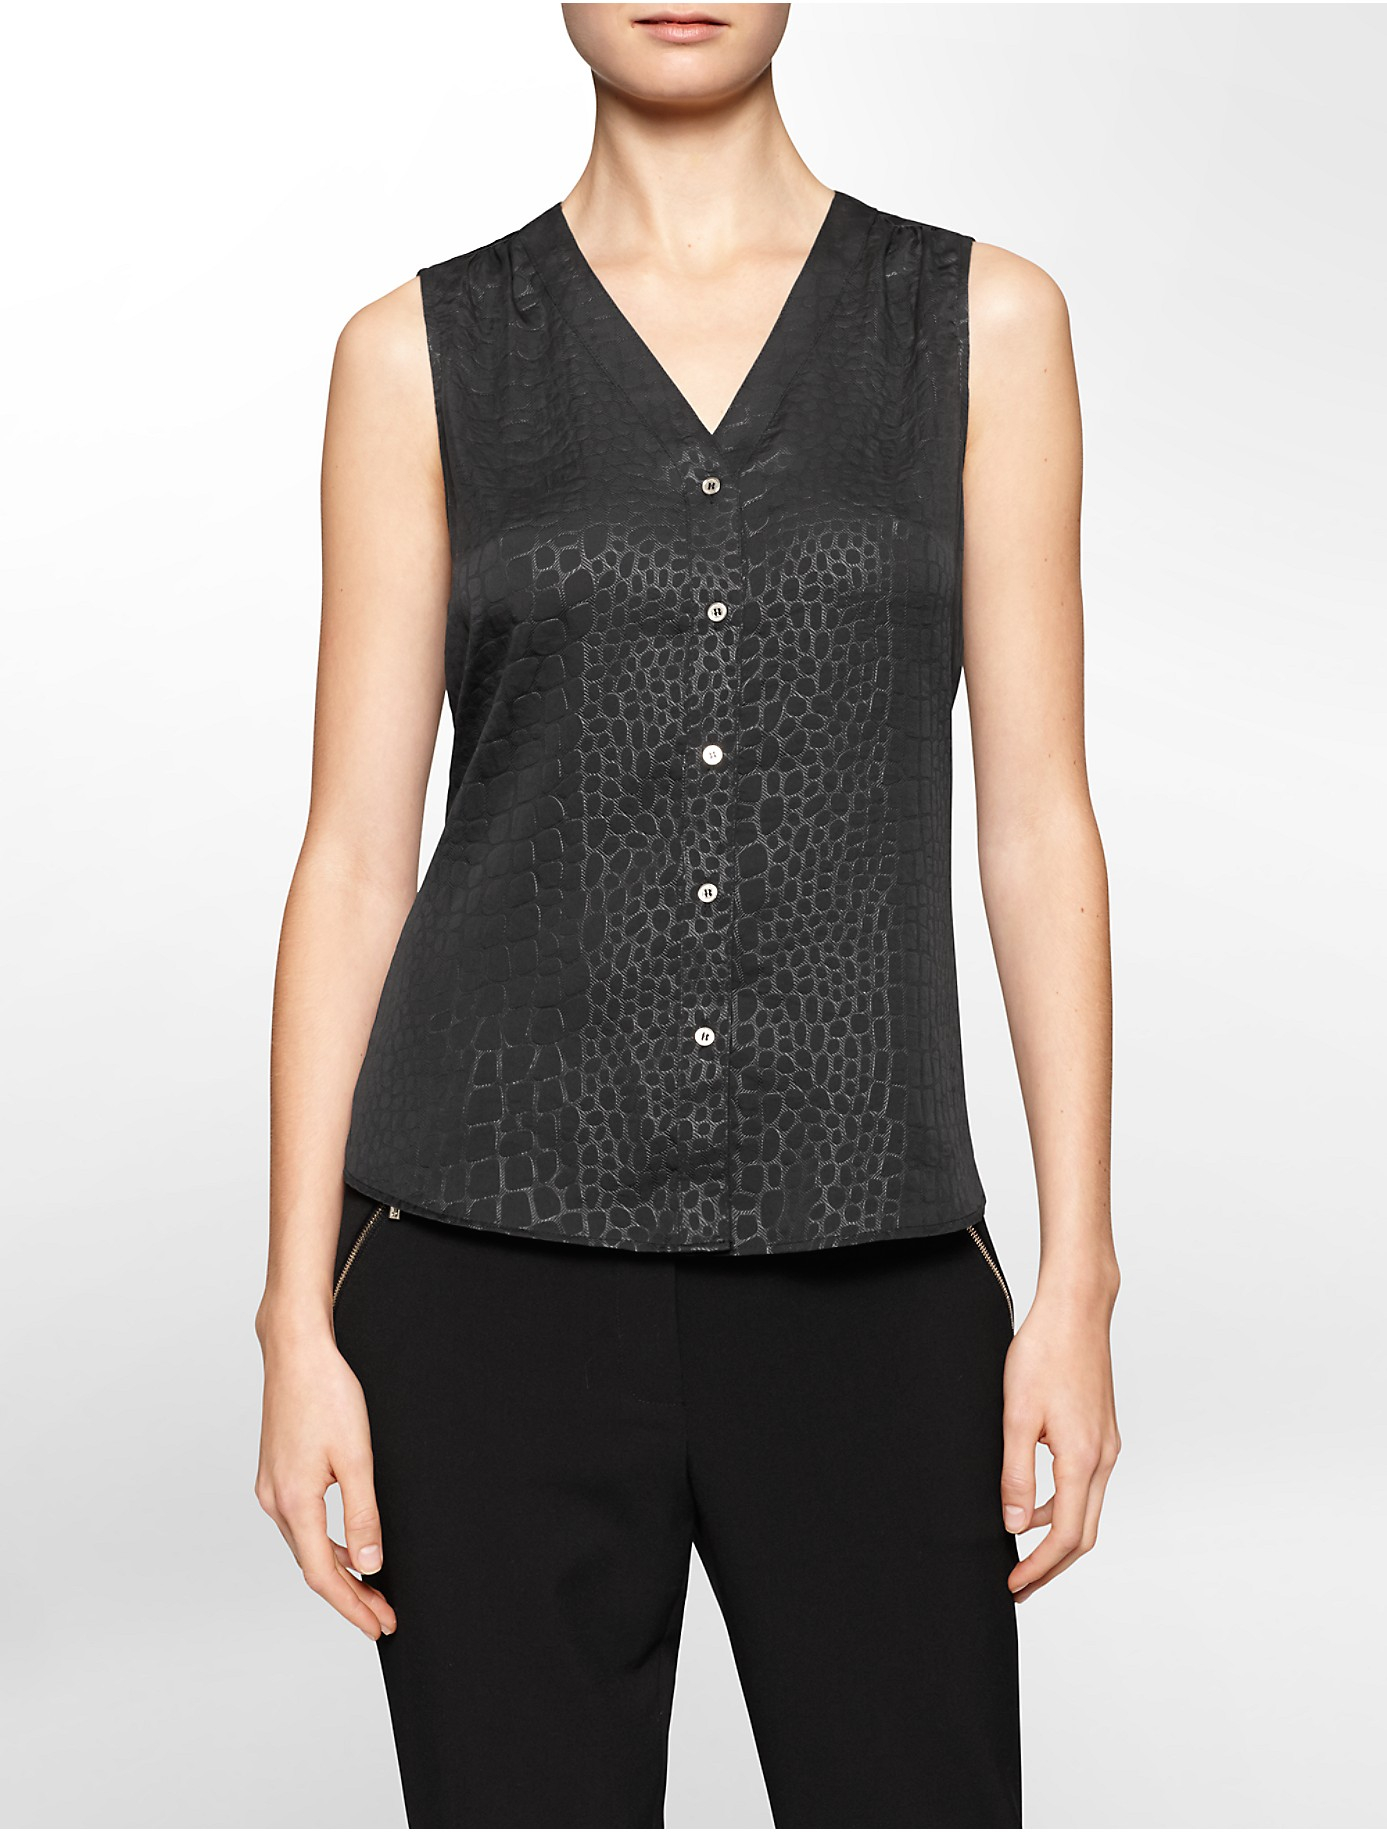 Lyst - Calvin Klein Snake Textured Pattern Sleeveless Top in Black